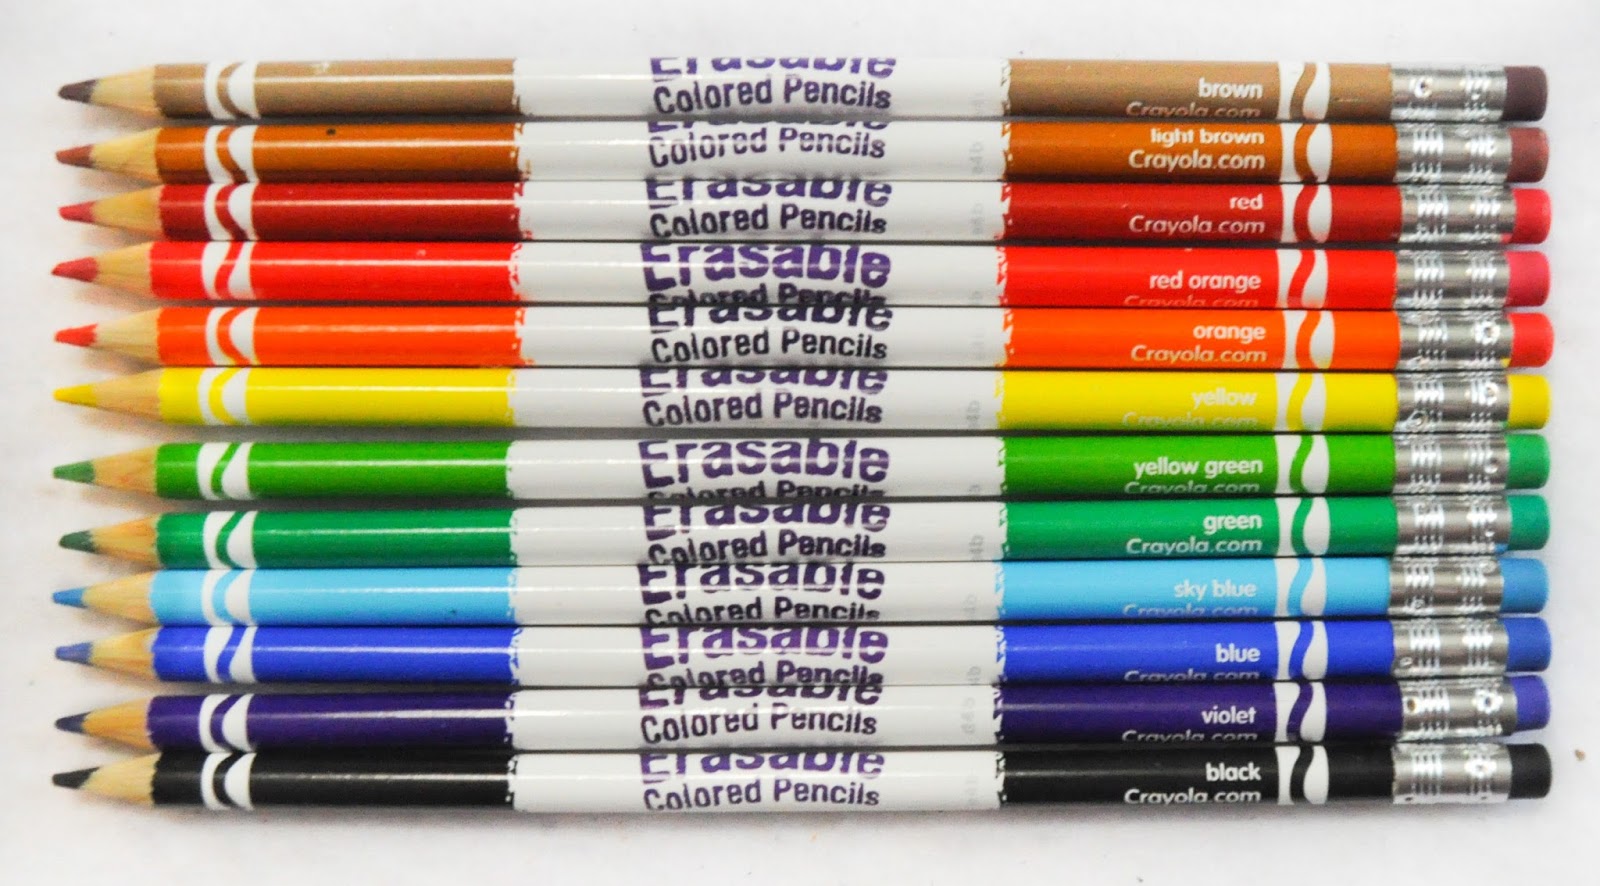 https://ooddss.com/media/product_images/2011-12_Erasable_Colored_Pencils030edited2edited2.JPG